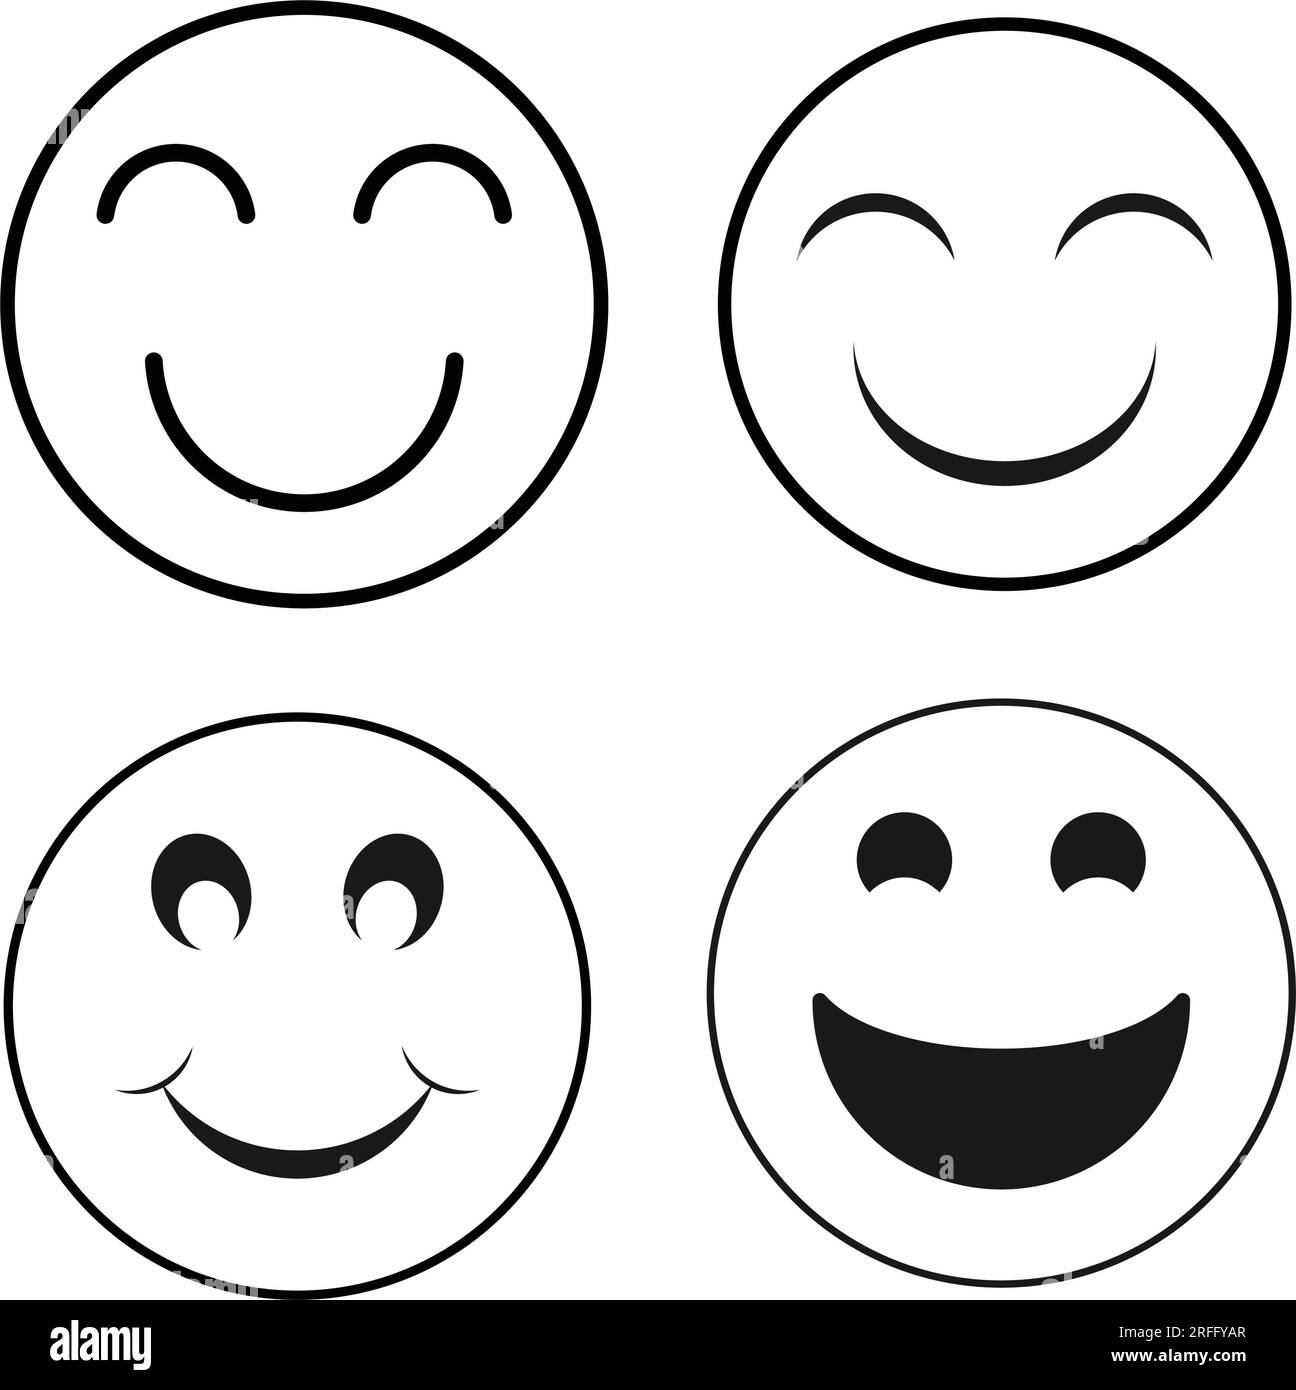 smiley face icon vector illustration design Stock Vector